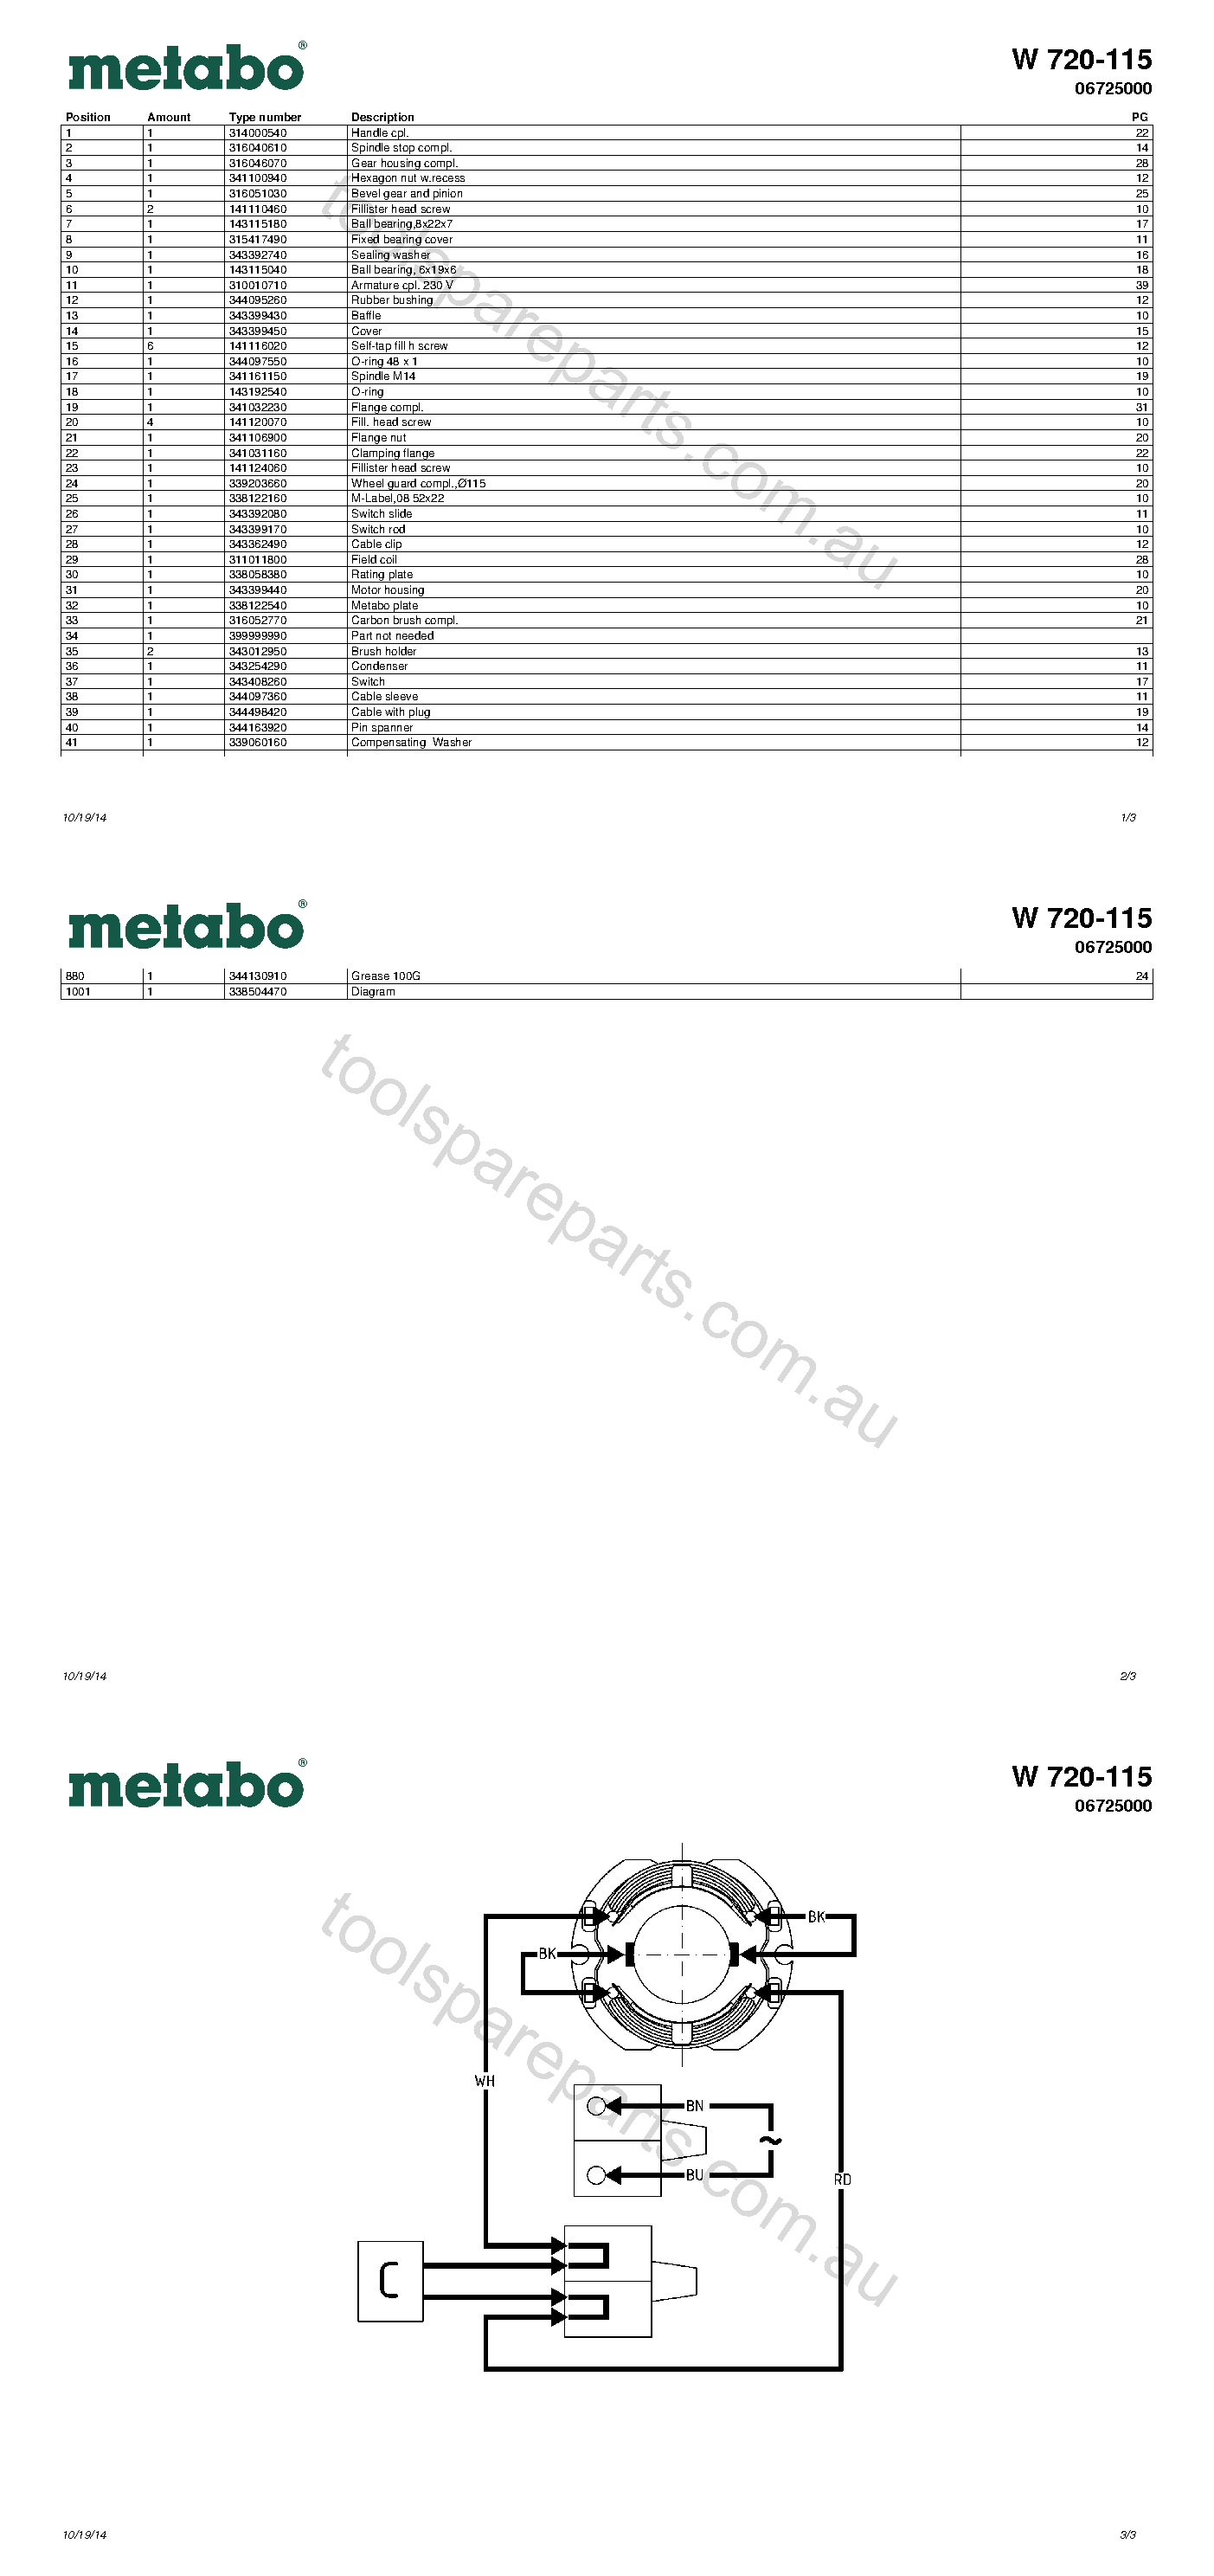 Metabo W 720-115 06725000  Diagram 1